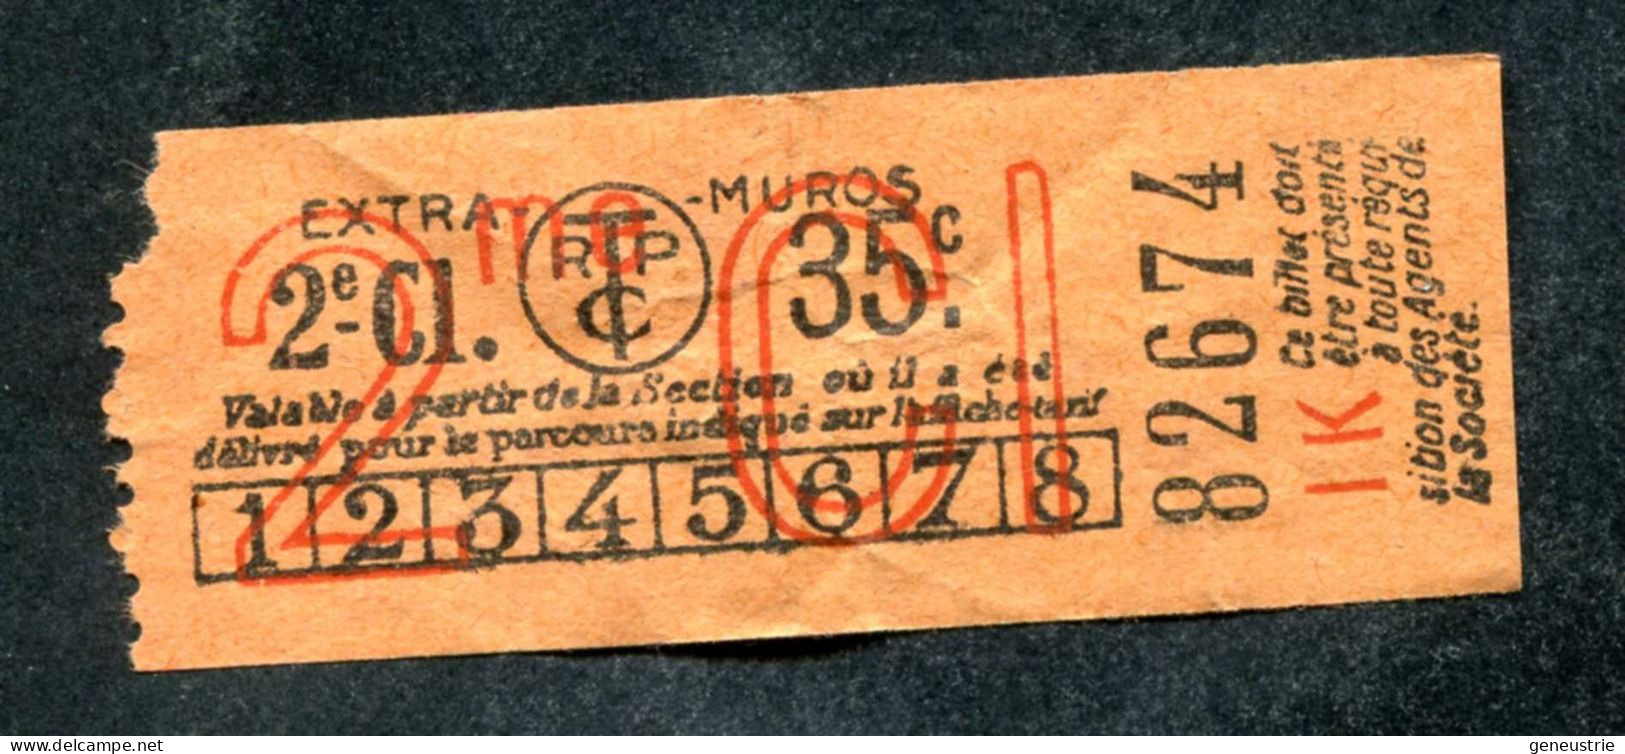 Ticket De Tramways Parisiens 1921 à 1938 (STCRP) Extra-Muros 2e Classe 35c - Paris" Tramway - Tram - Europe